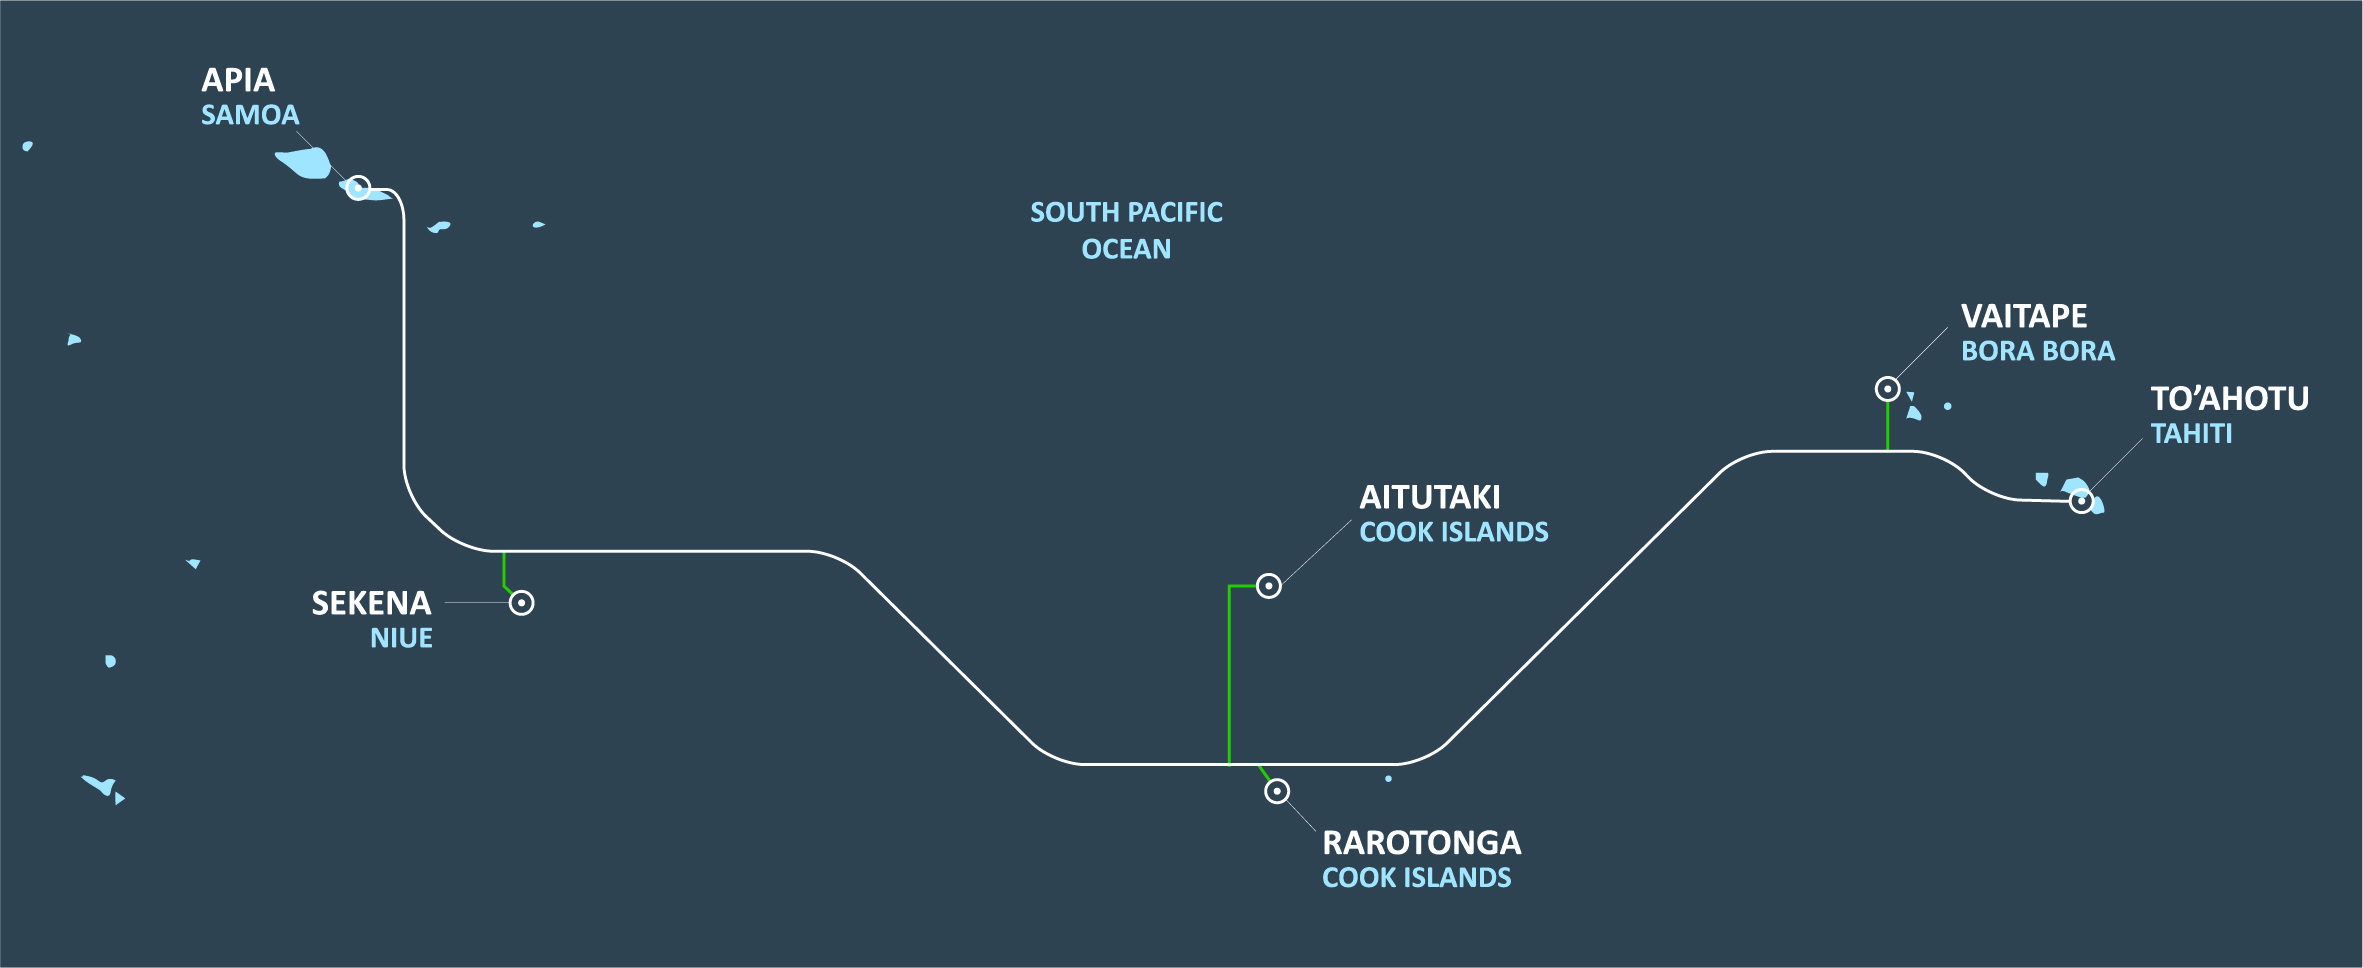 Image 02 Manatua System Map